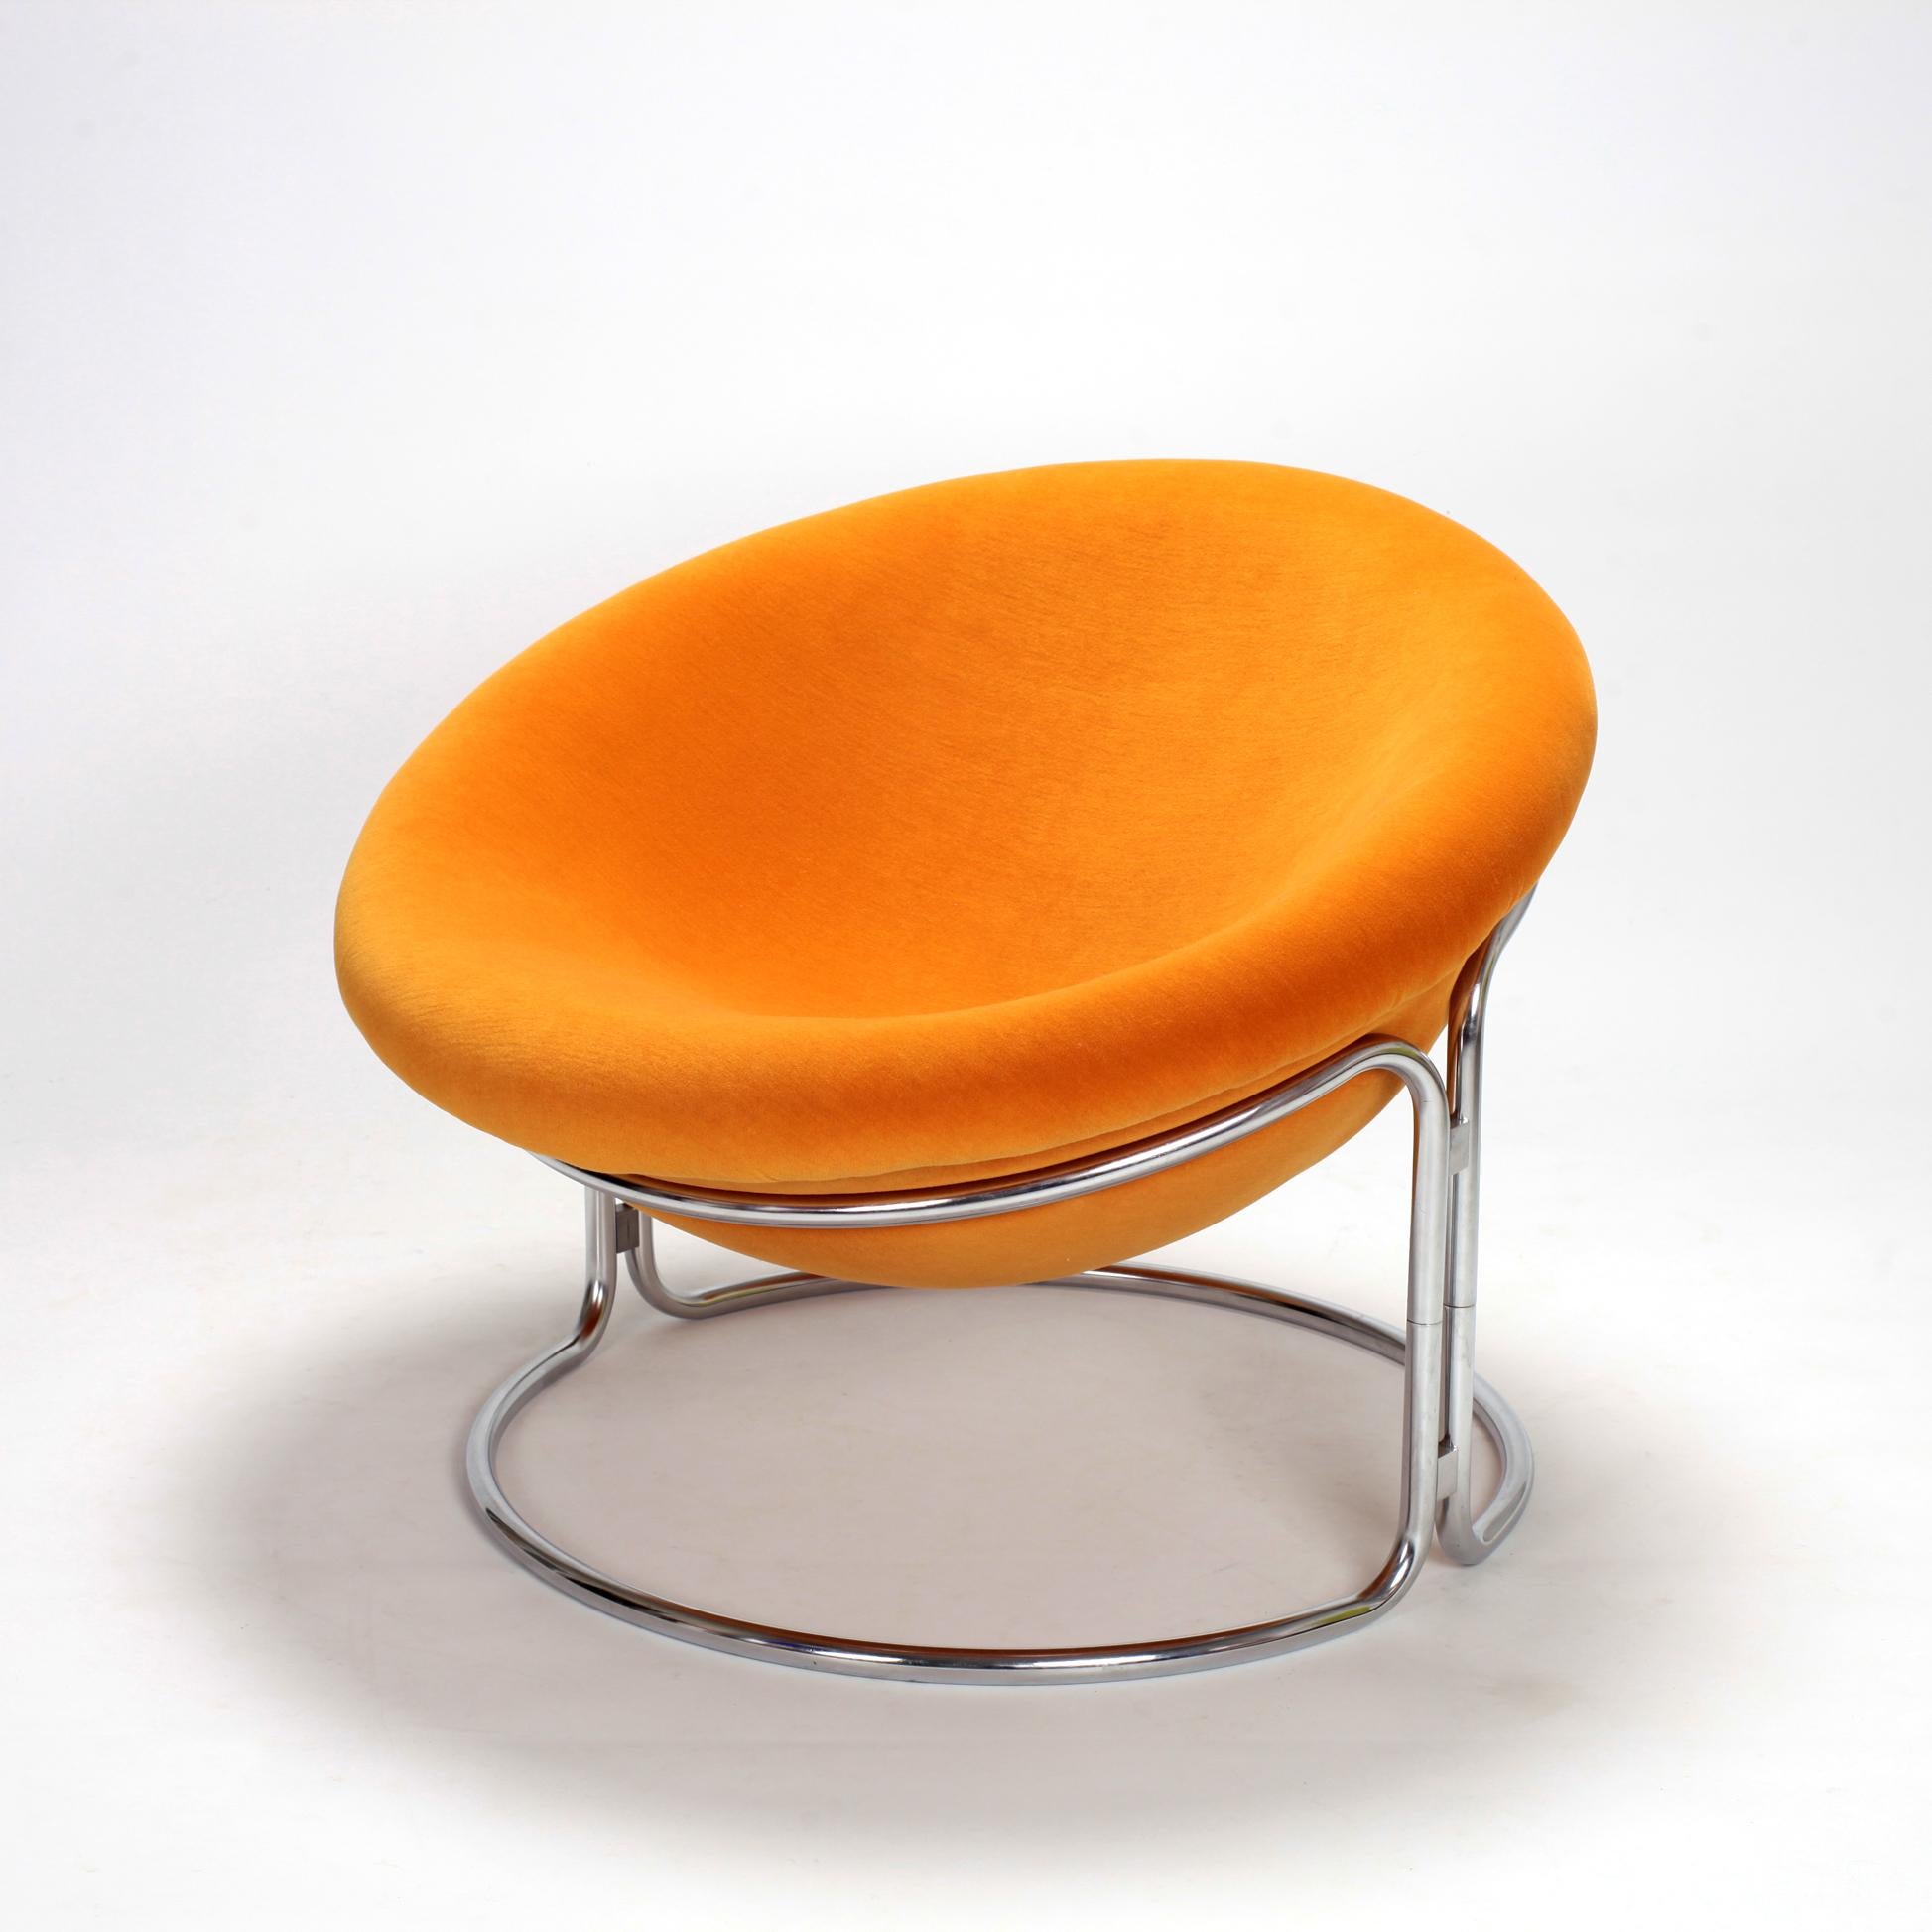 Luigi Colani spage age armchair for Kusch & Co 1968
Half sphere shape, organic design
Fiberglass shell and chrome-plated tubular metal frame
Reupholstered in shiny orange velvet fabric.